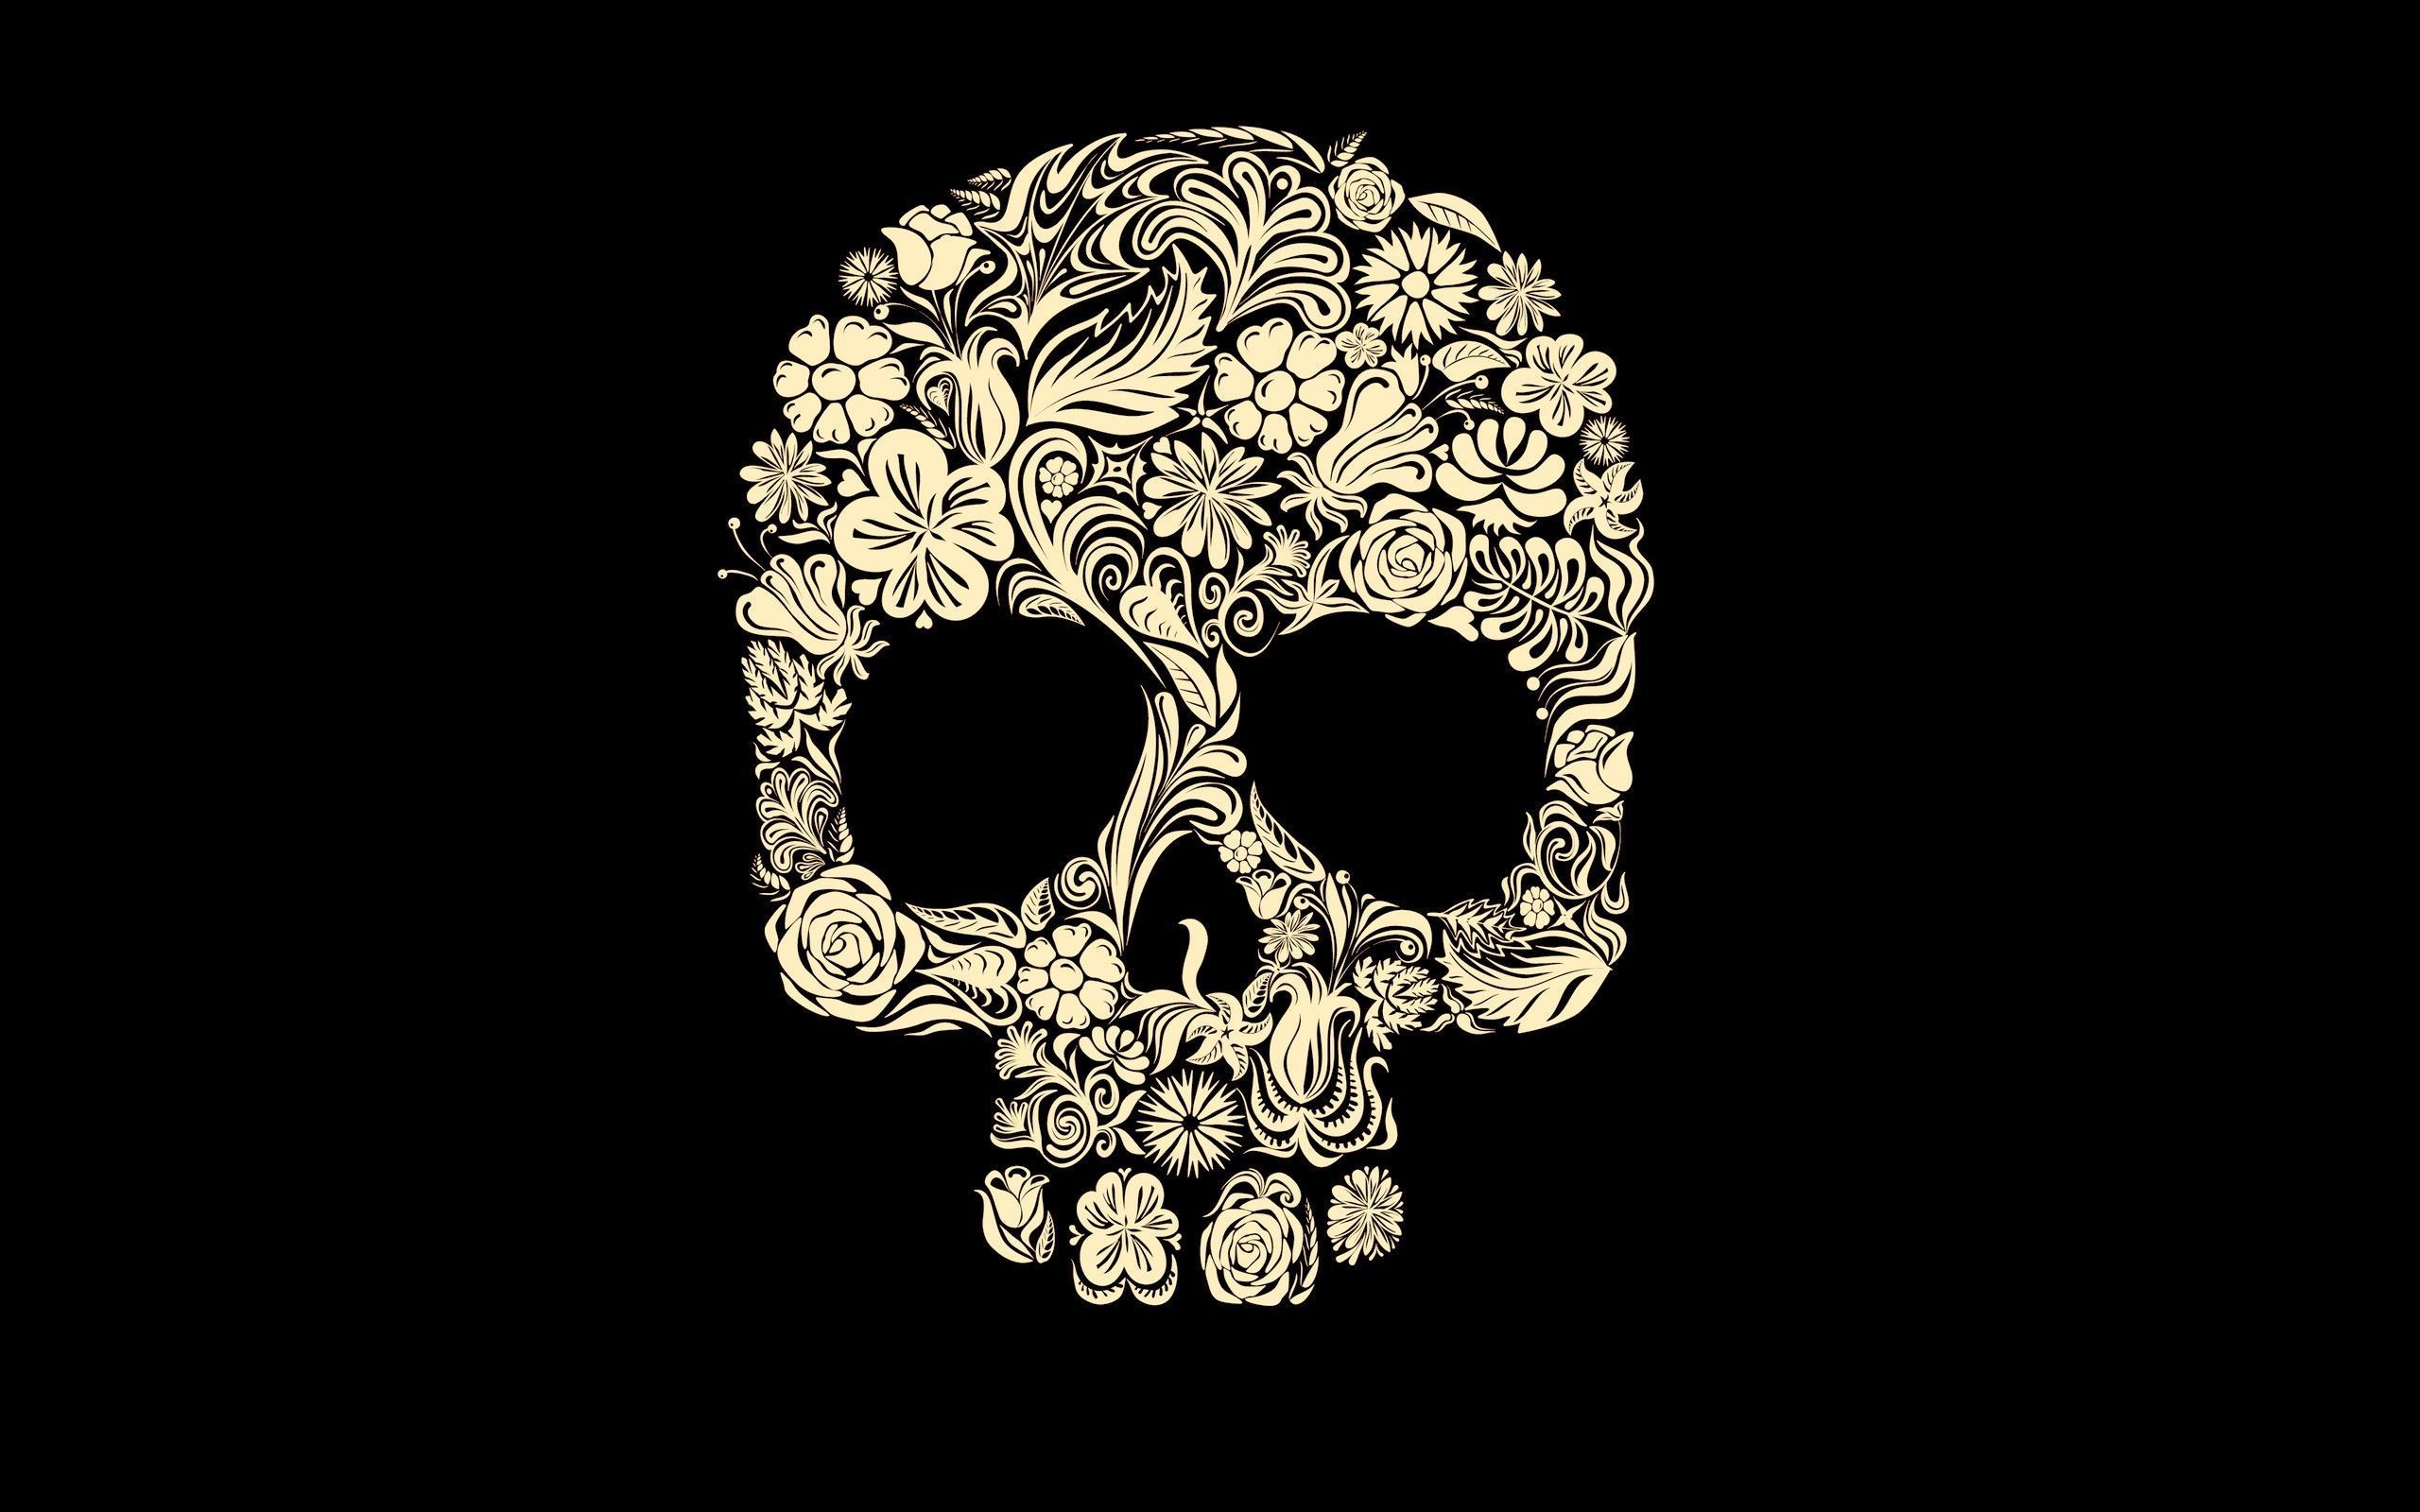 Skull Wallpaper Downloads 14509 - HD Wallpapers Site